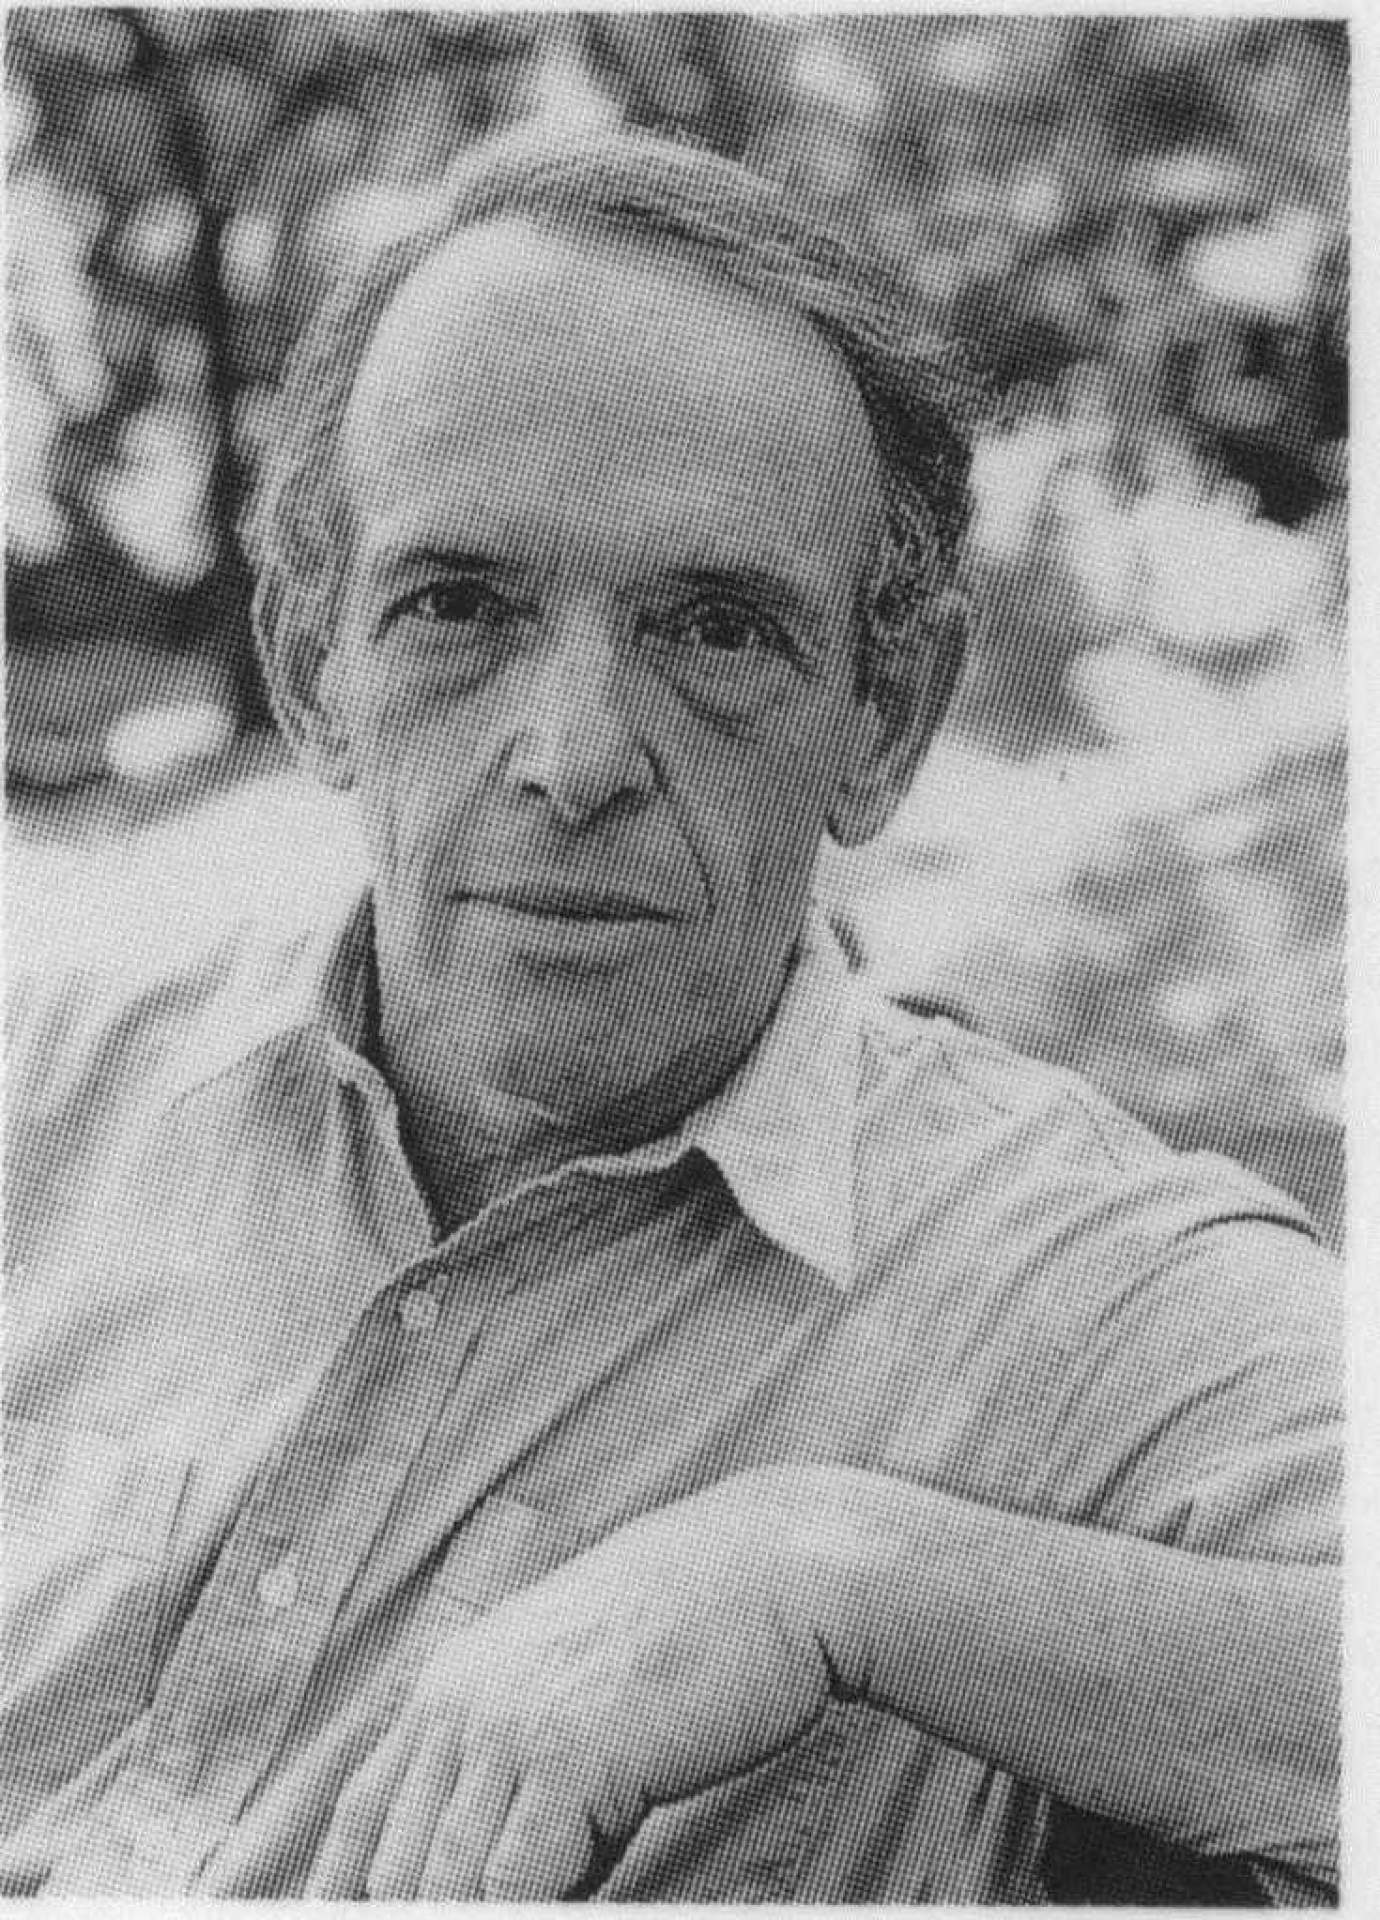 Burchfield Penney's Writers and Poets Series Presents Irving Feldman